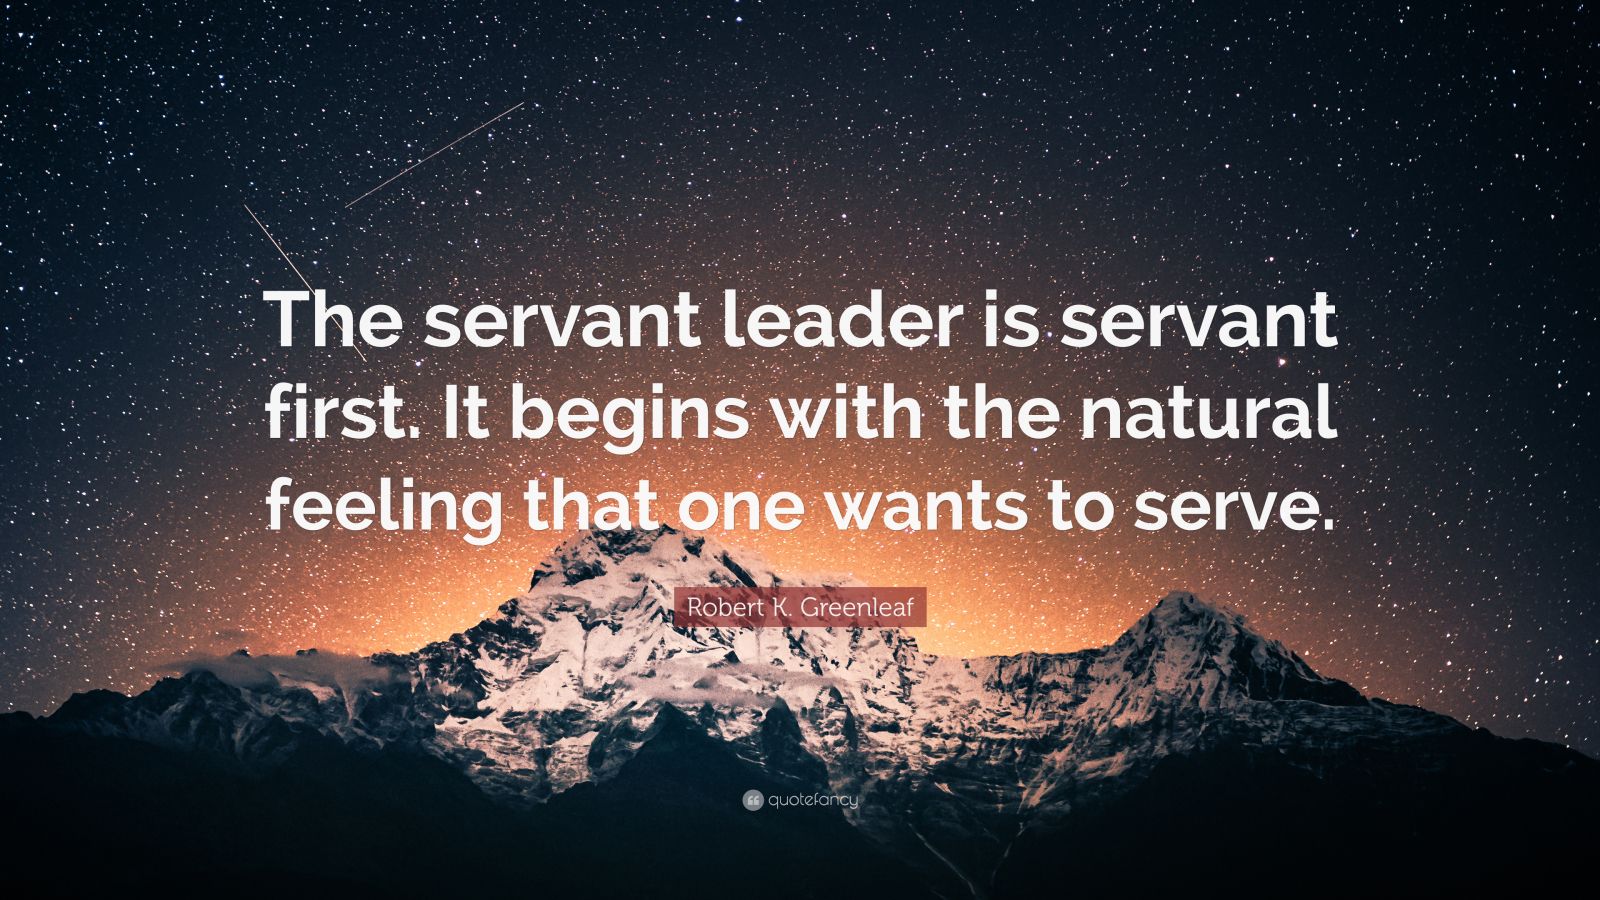 Robert K. Greenleaf Quote “The servant leader is servant